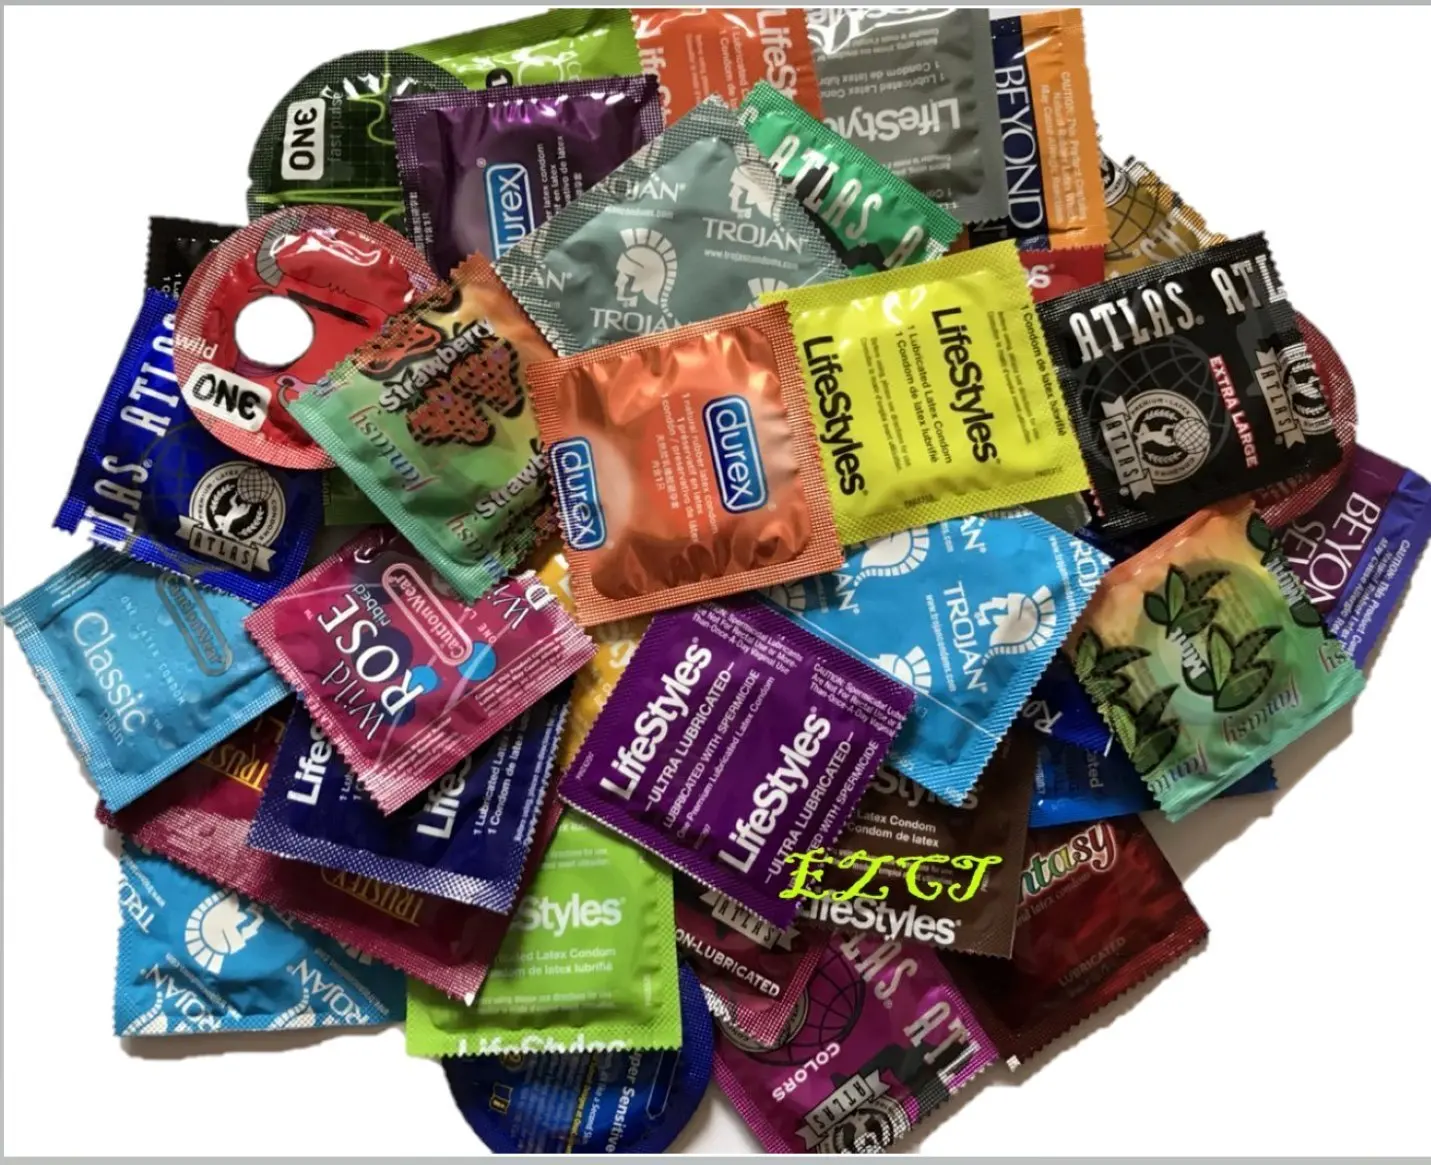 Condoms Variety Pack 50 : Trojan, Lifestyles, One, Atlas, Beyond Seven, Cro...